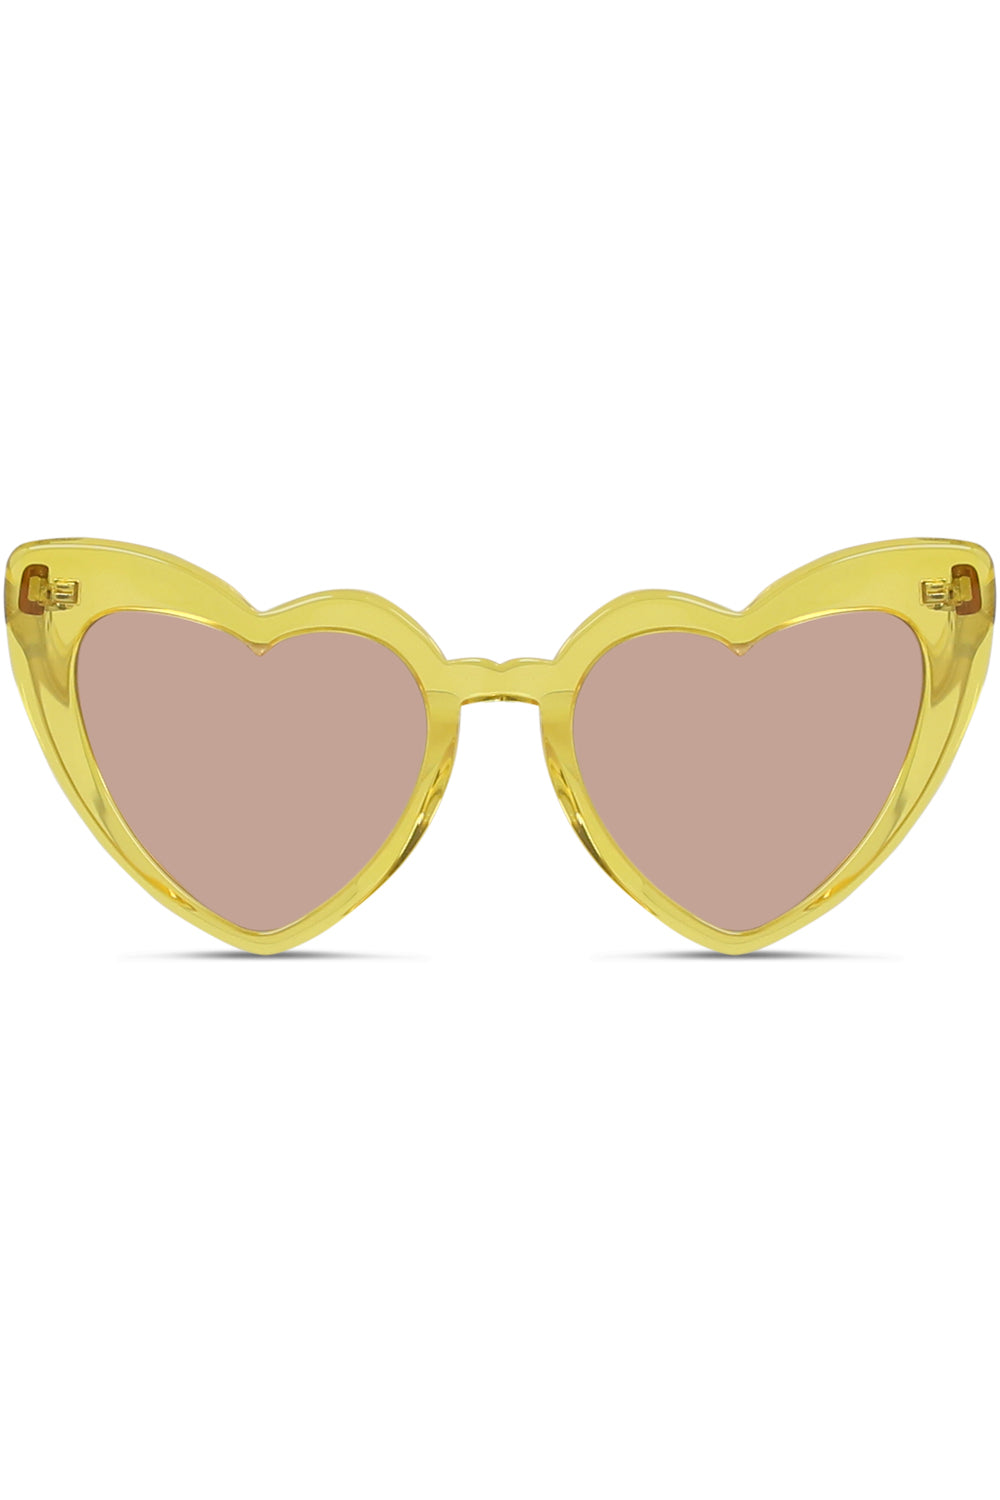 Buy R Resist Aviator Sunglasses Yellow For Men & Women Online @ Best Prices  in India | Flipkart.com